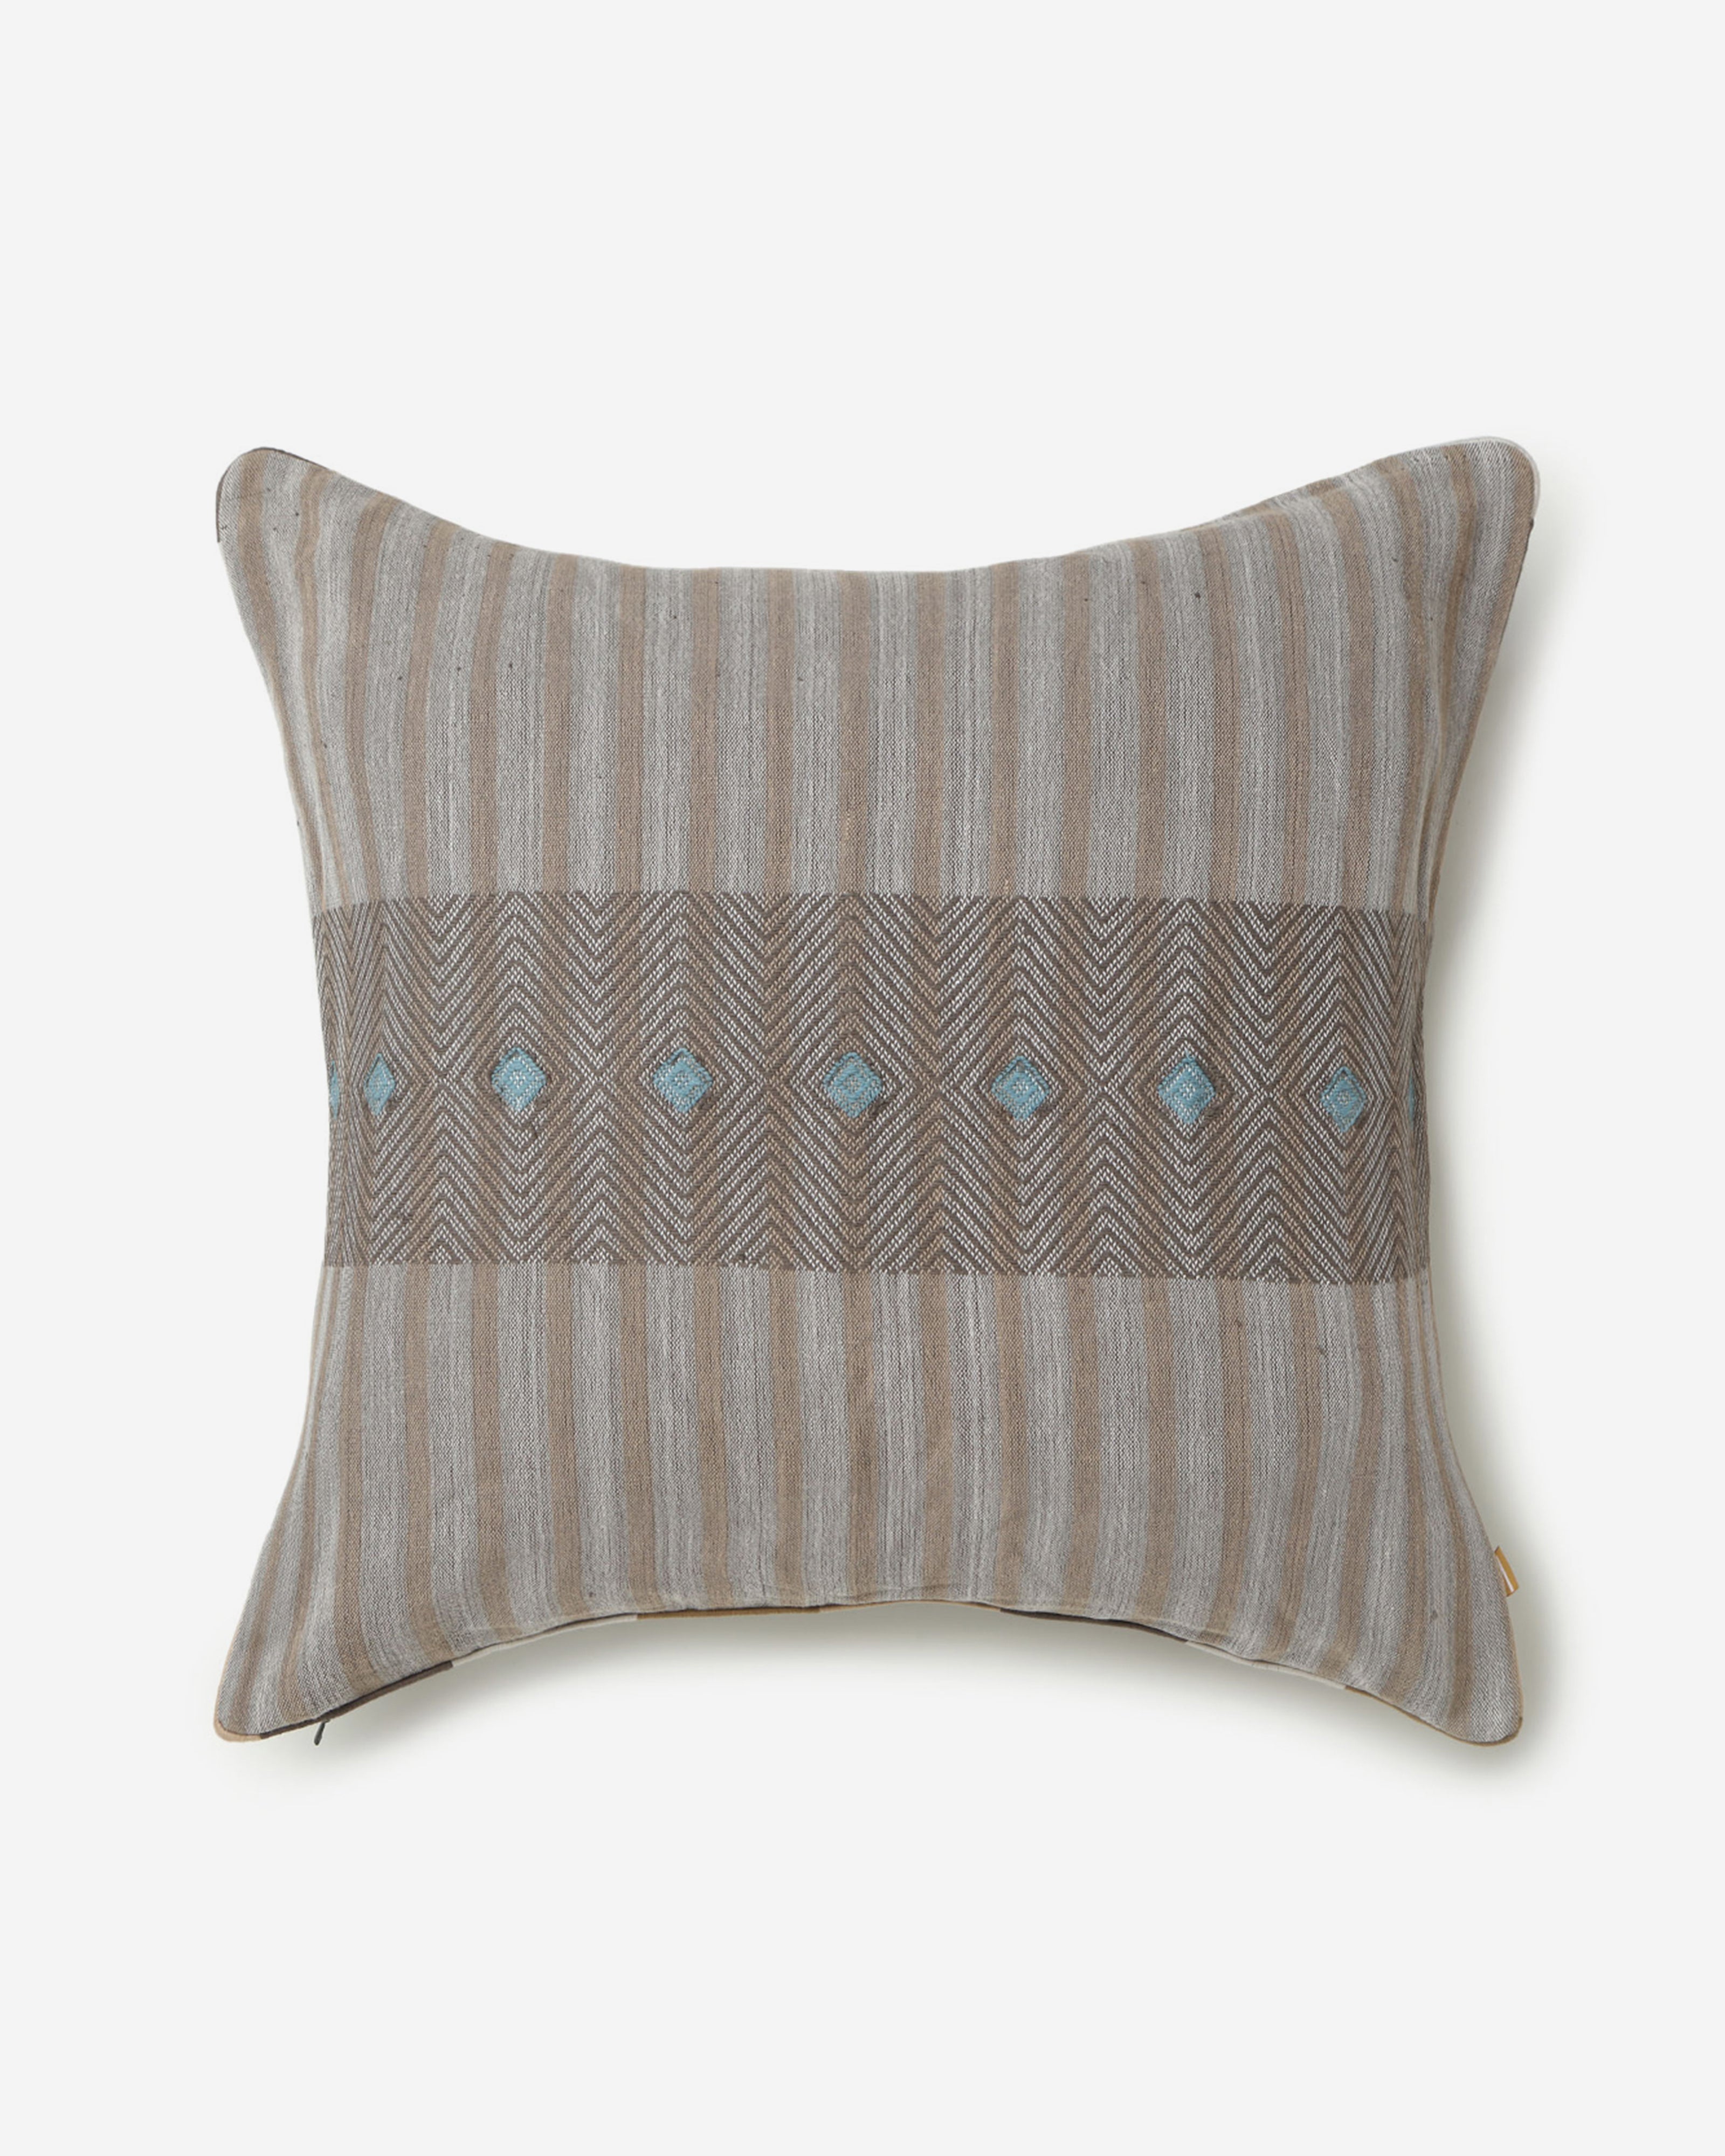 Muji Extra Weft Cotton Cushion Cover - Medium Grey